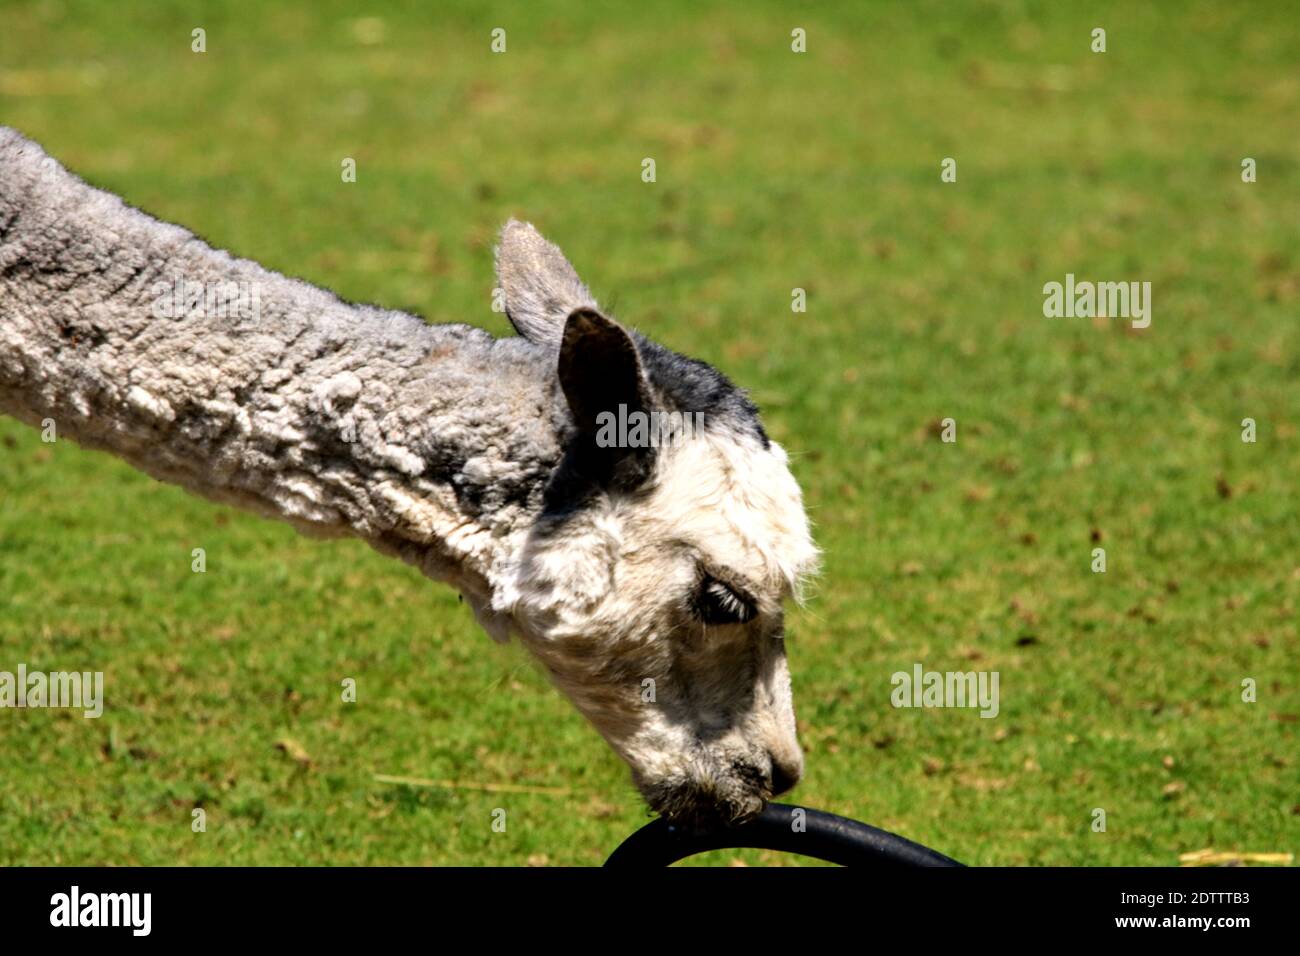 Dog On Grass Stock Photo